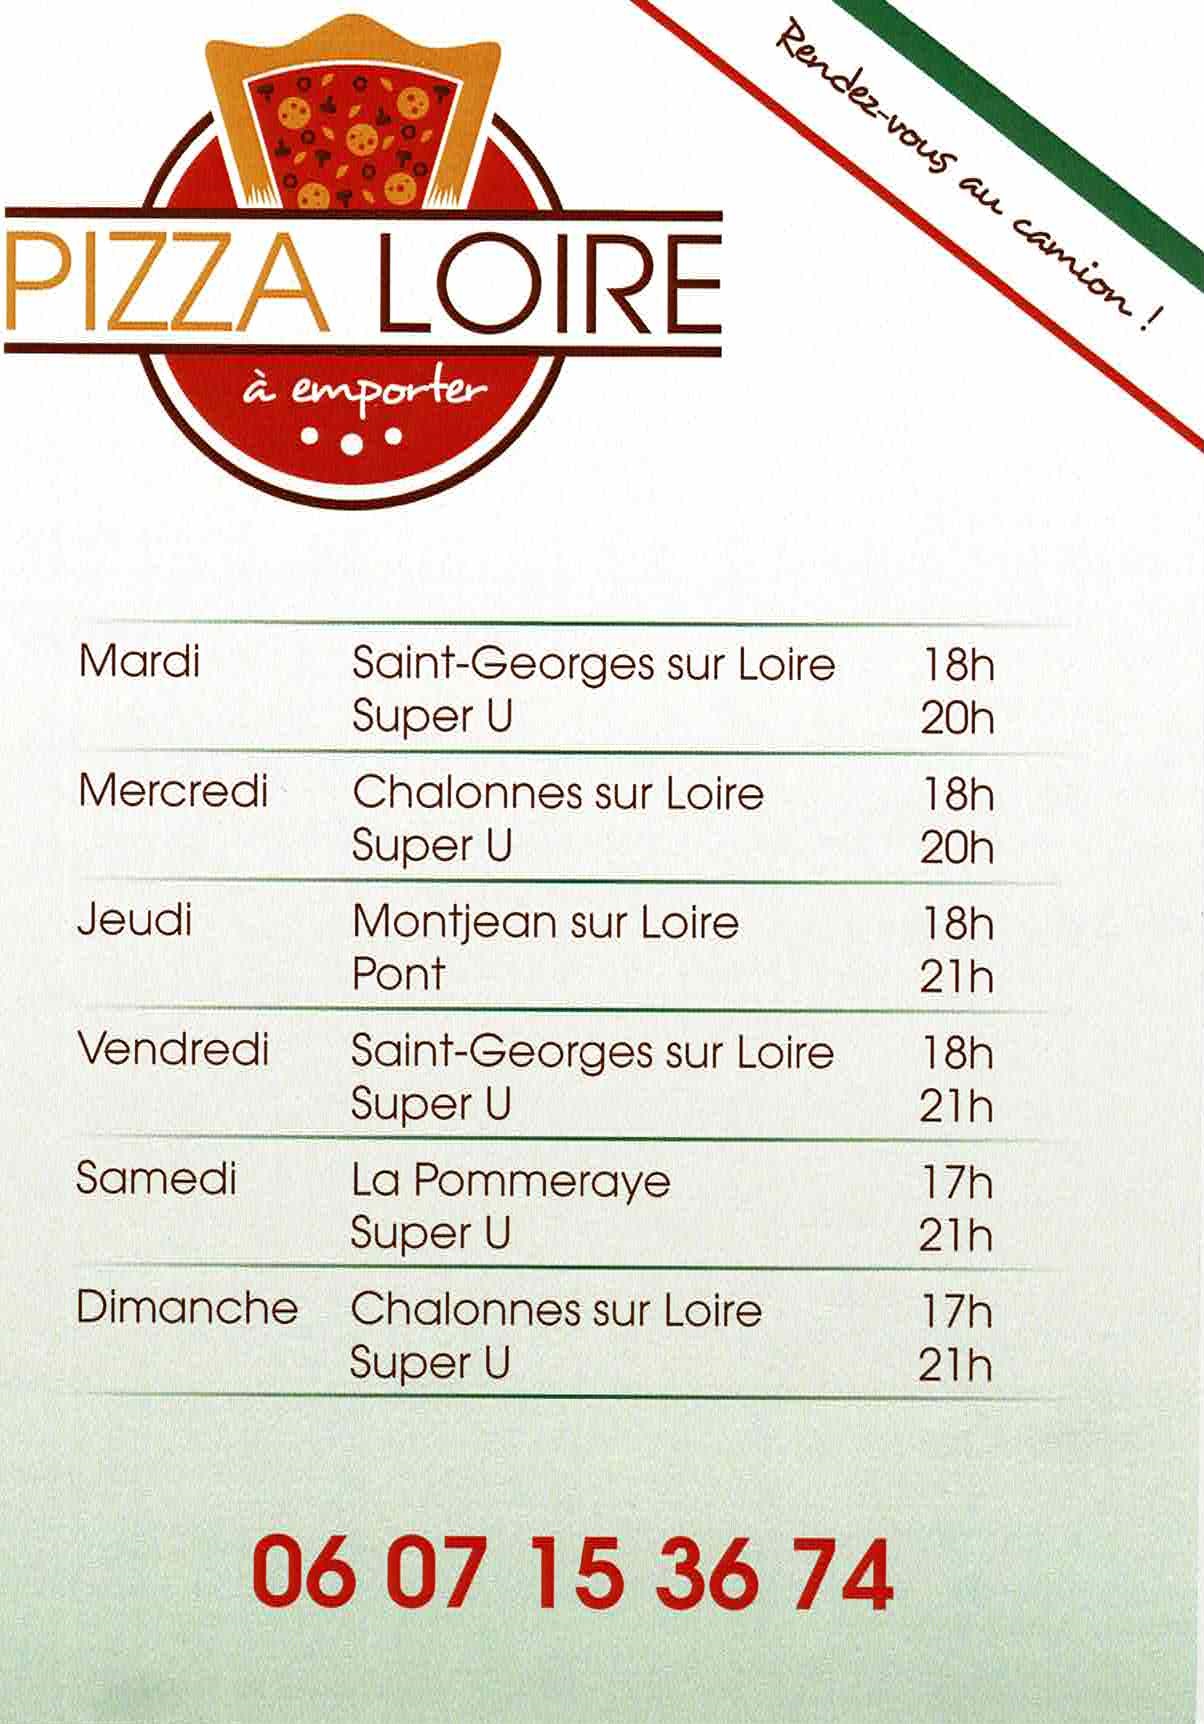 69_Pizza_Loire.jpg